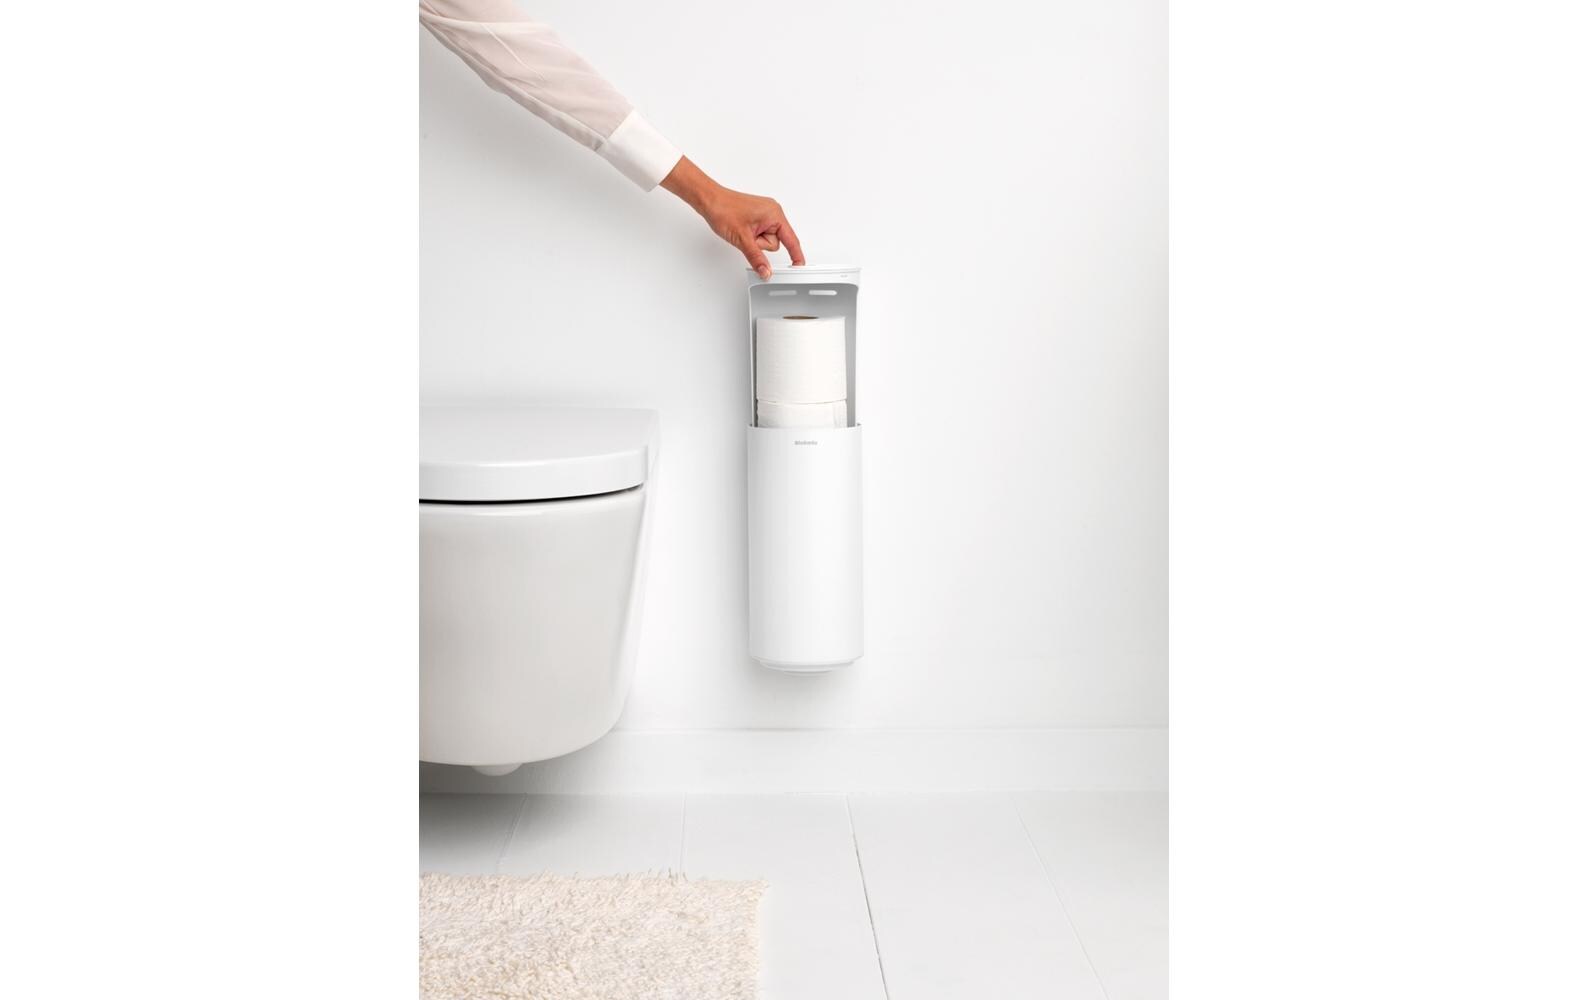 Brabantia Toilettenpapierhalter Mindset Weiss